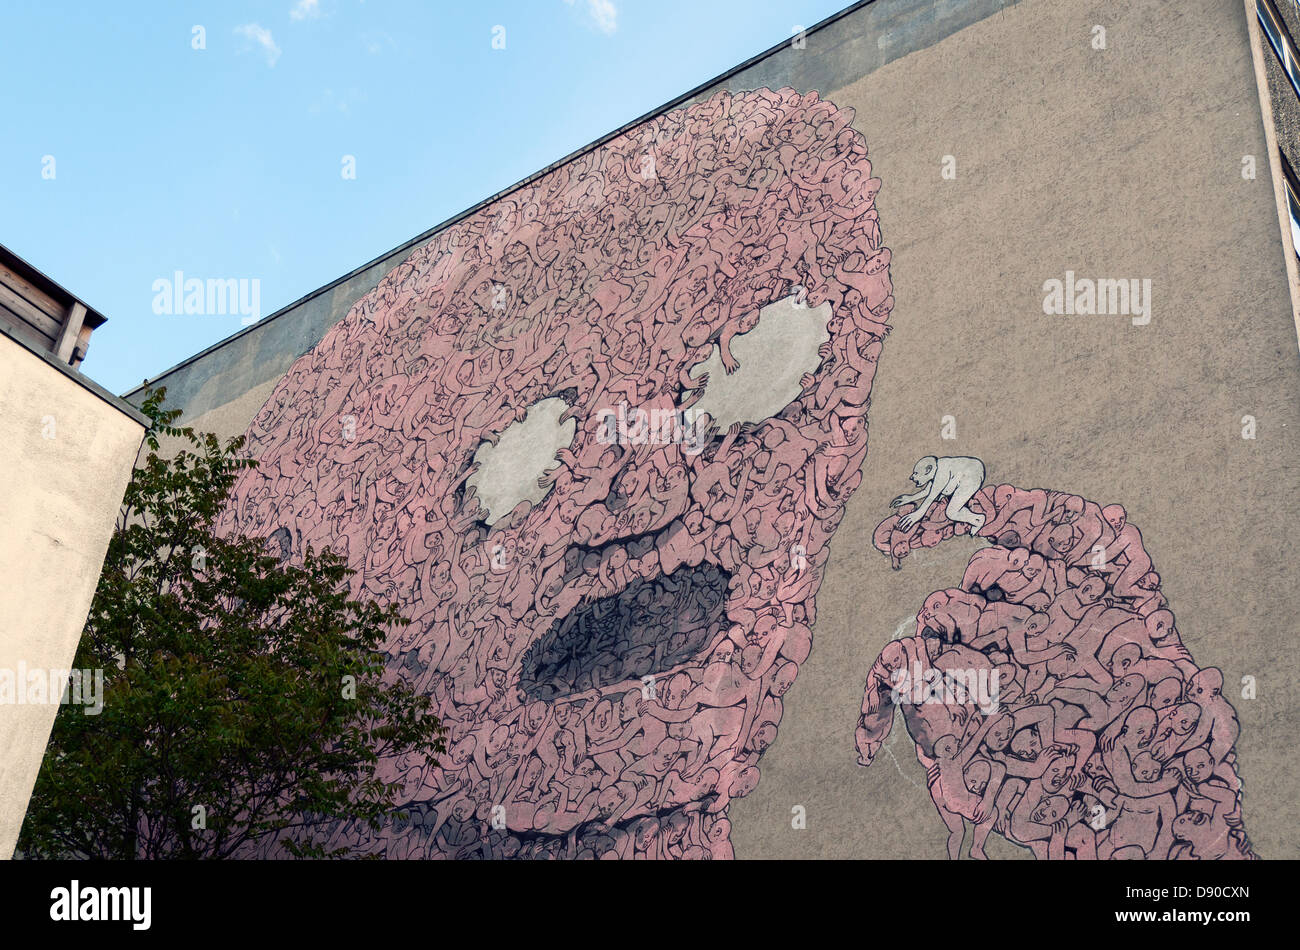 Leviathan Wall Painting by Blu, Kreuzberg Street Art, Berlin, Germany Stock Photo